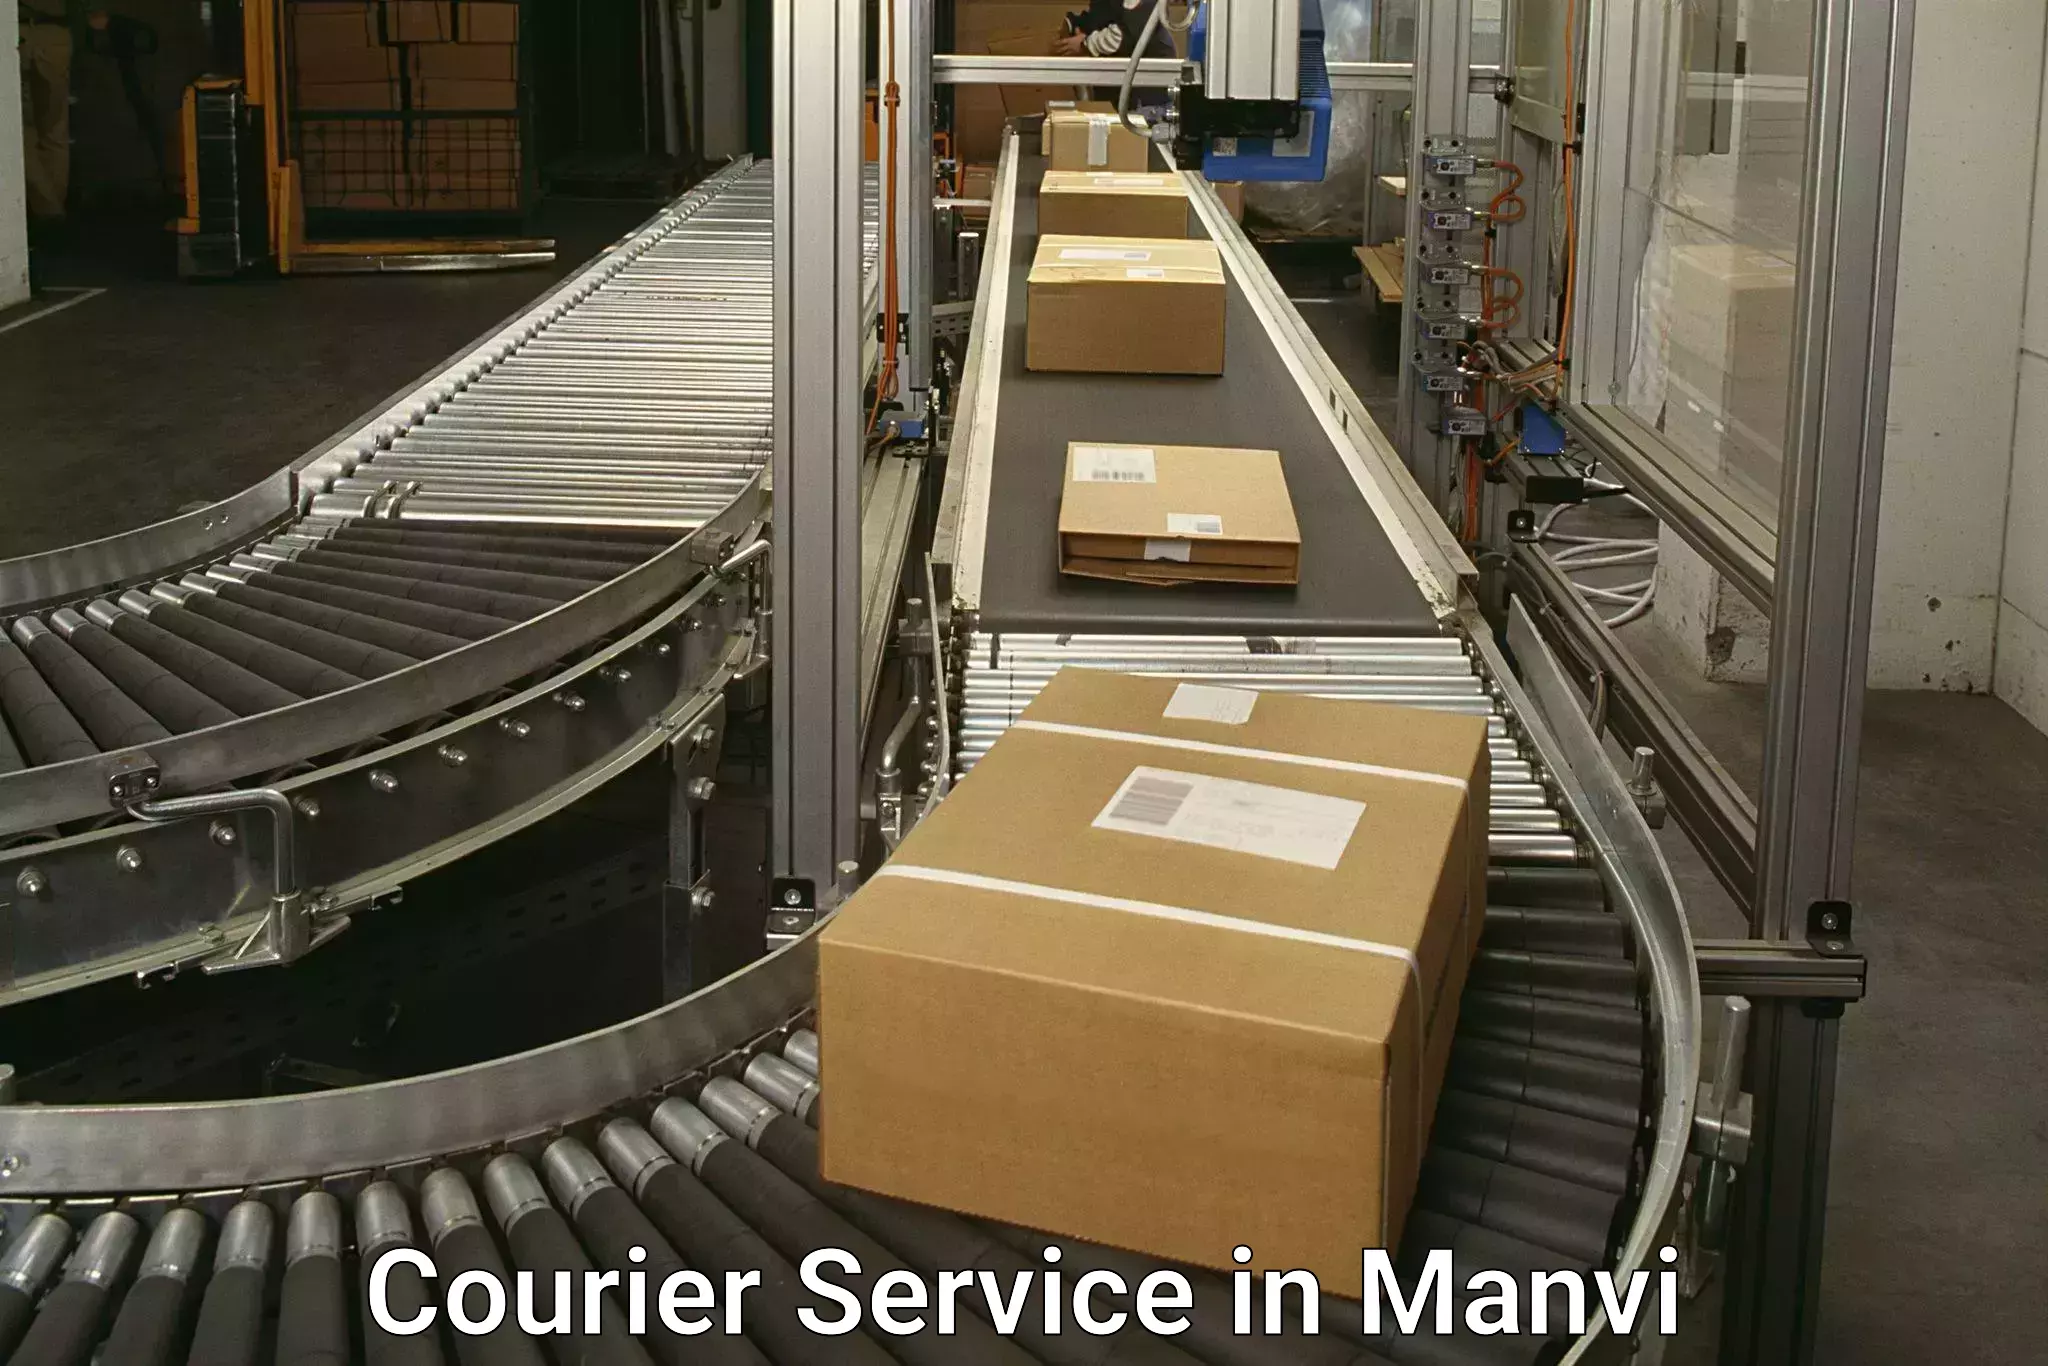 Emergency parcel delivery in Manvi